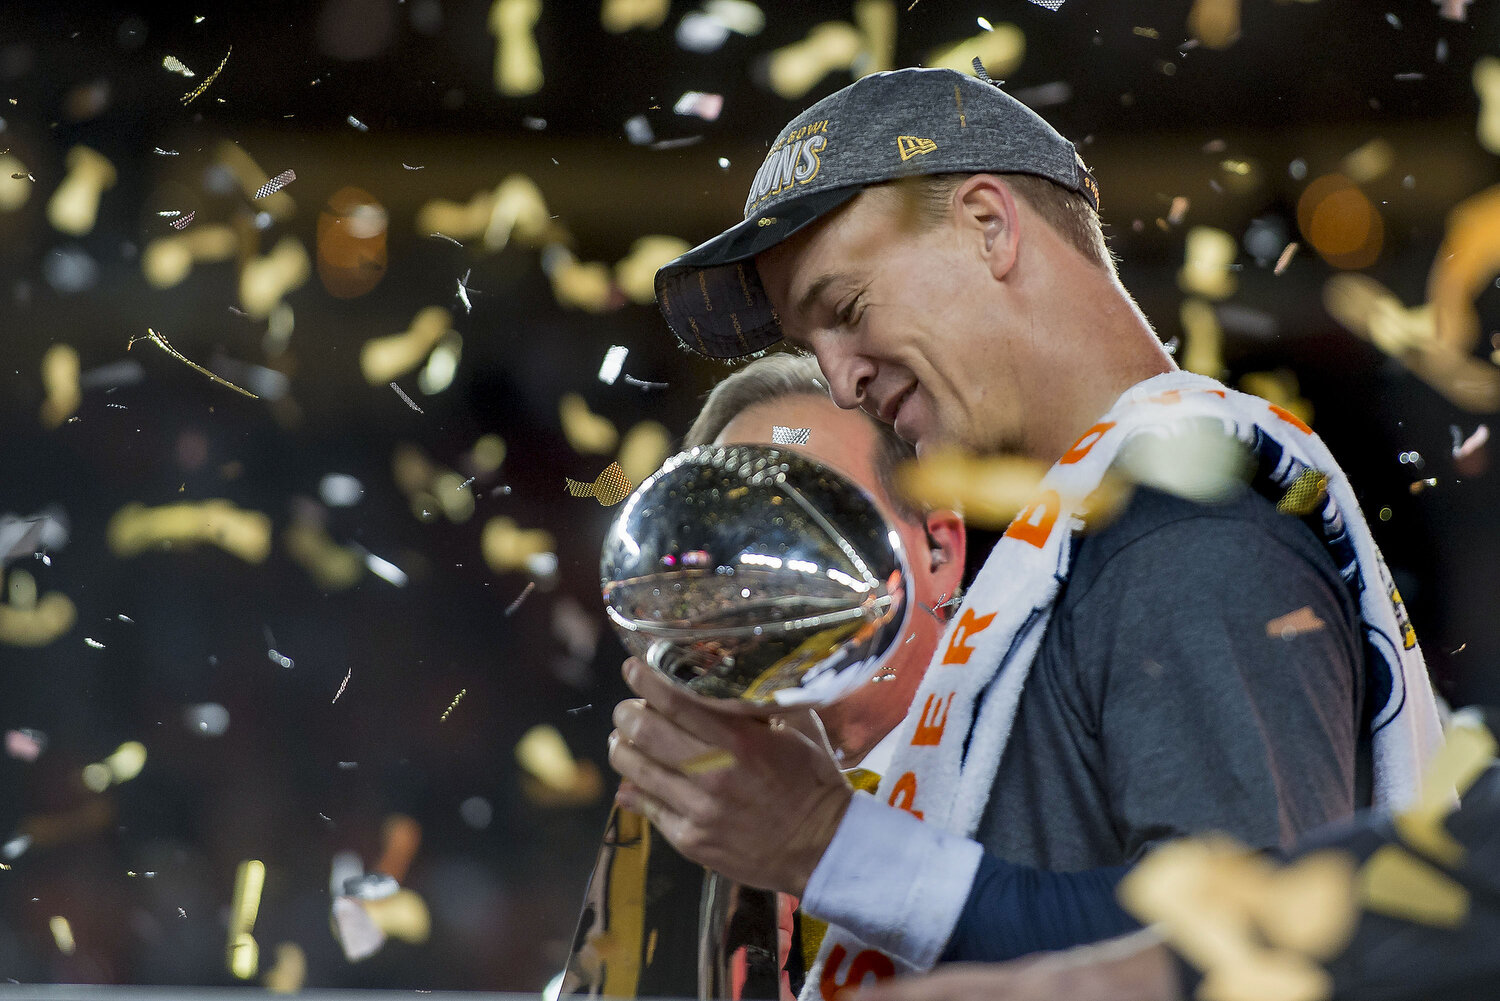  Denver Broncos quarterback Peyton Manning holds the Lombardi Trophy  following Super Bowl 50 on Sunday, Feb. 7, 2016 at Levi's Stadium in Santa Clara, Calif. The Broncos won the game 24-10. 